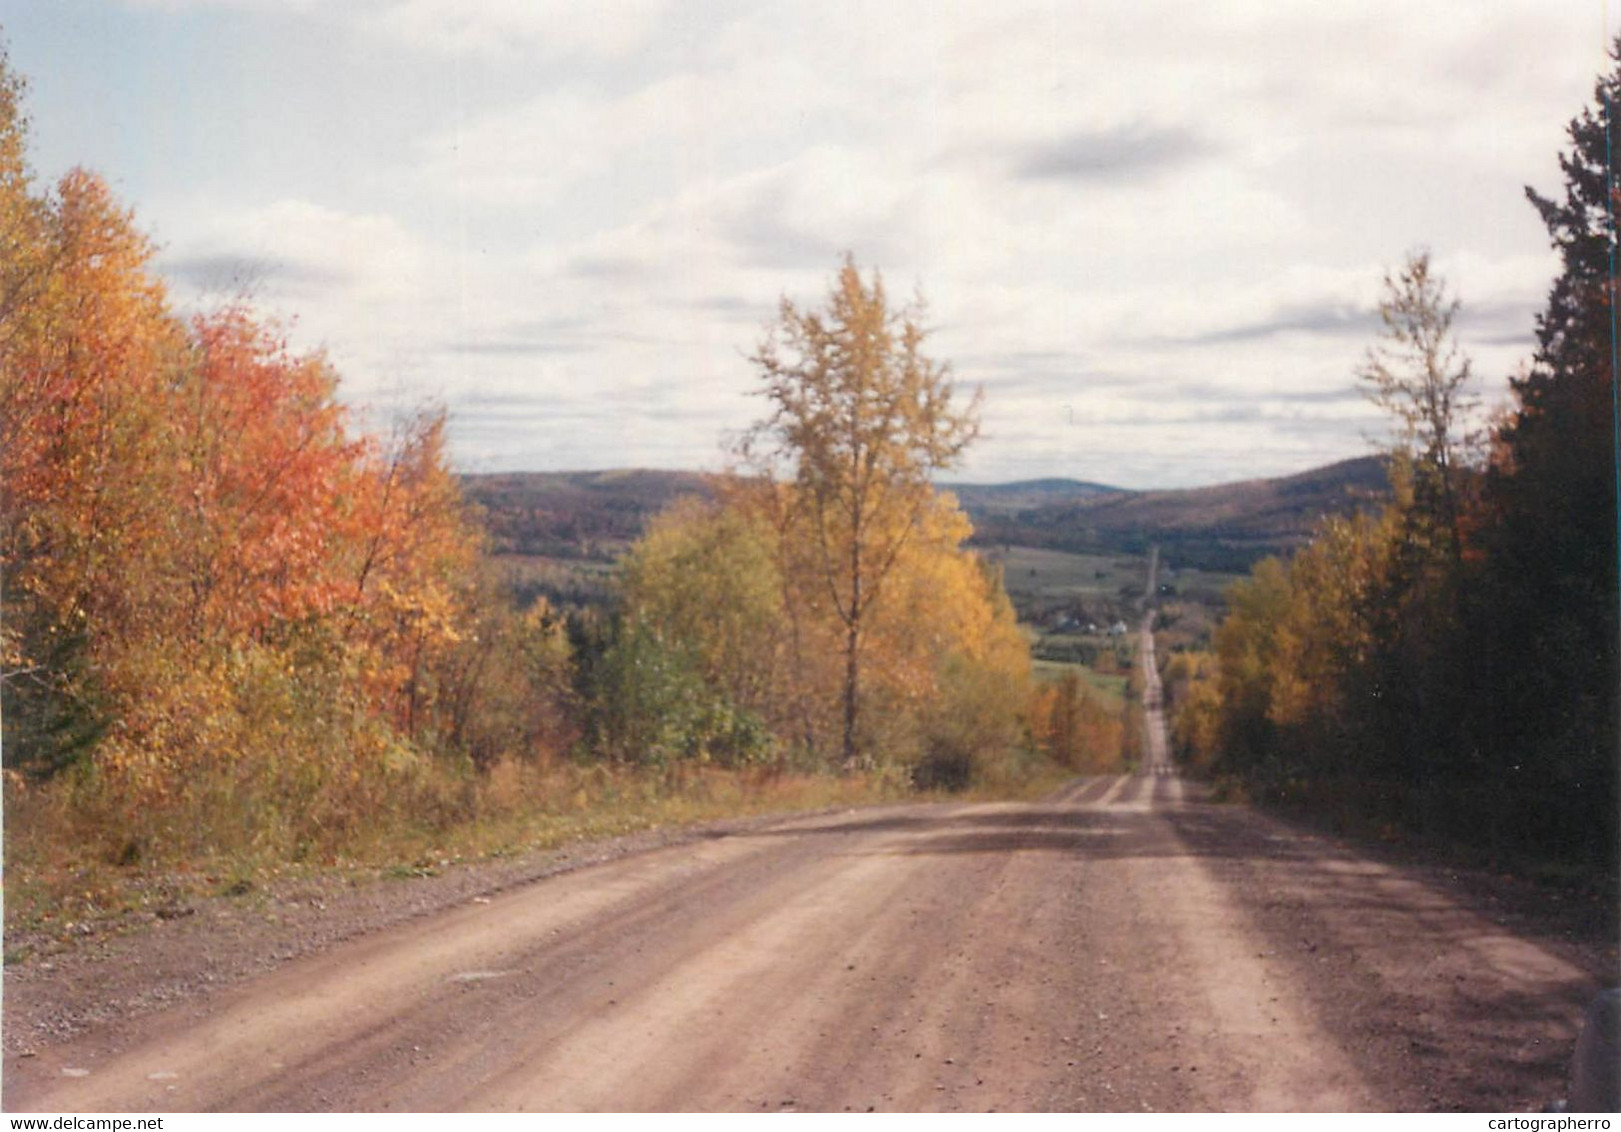 Postcard Canada Quebec Matapedia Valley Albertville Picturesque Autumn Scenery - Gaspé